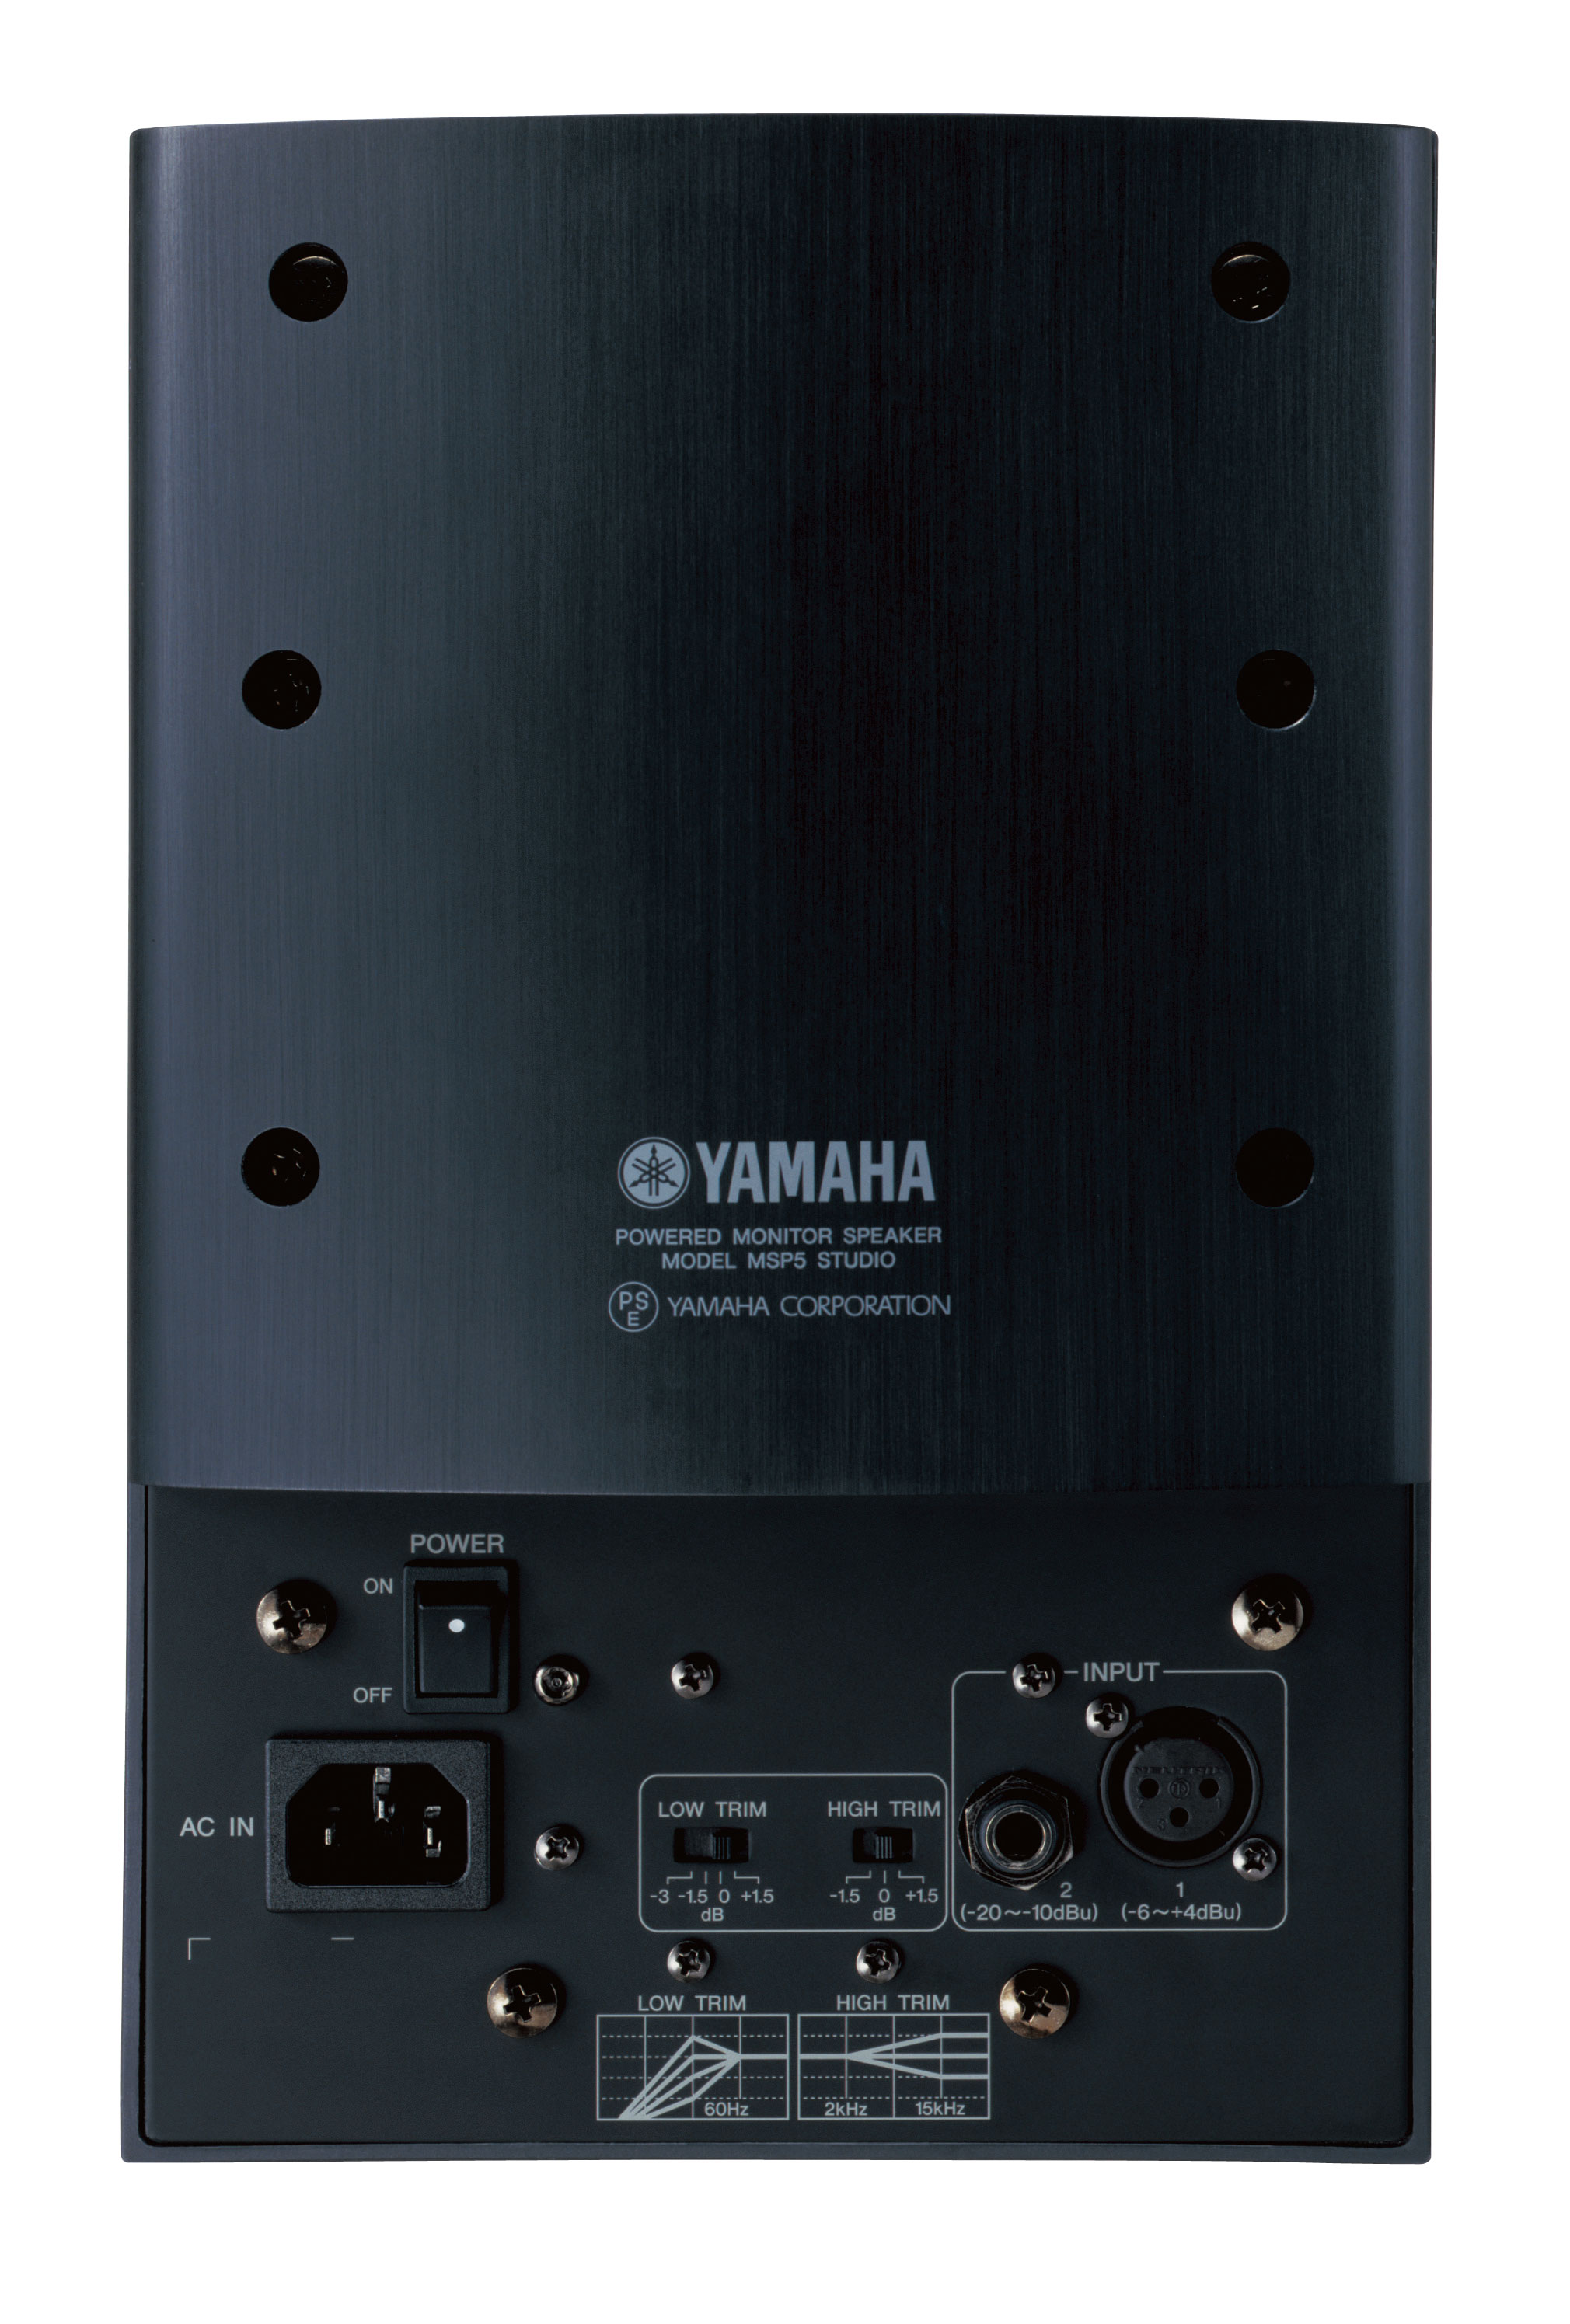 Yamaha MSP5